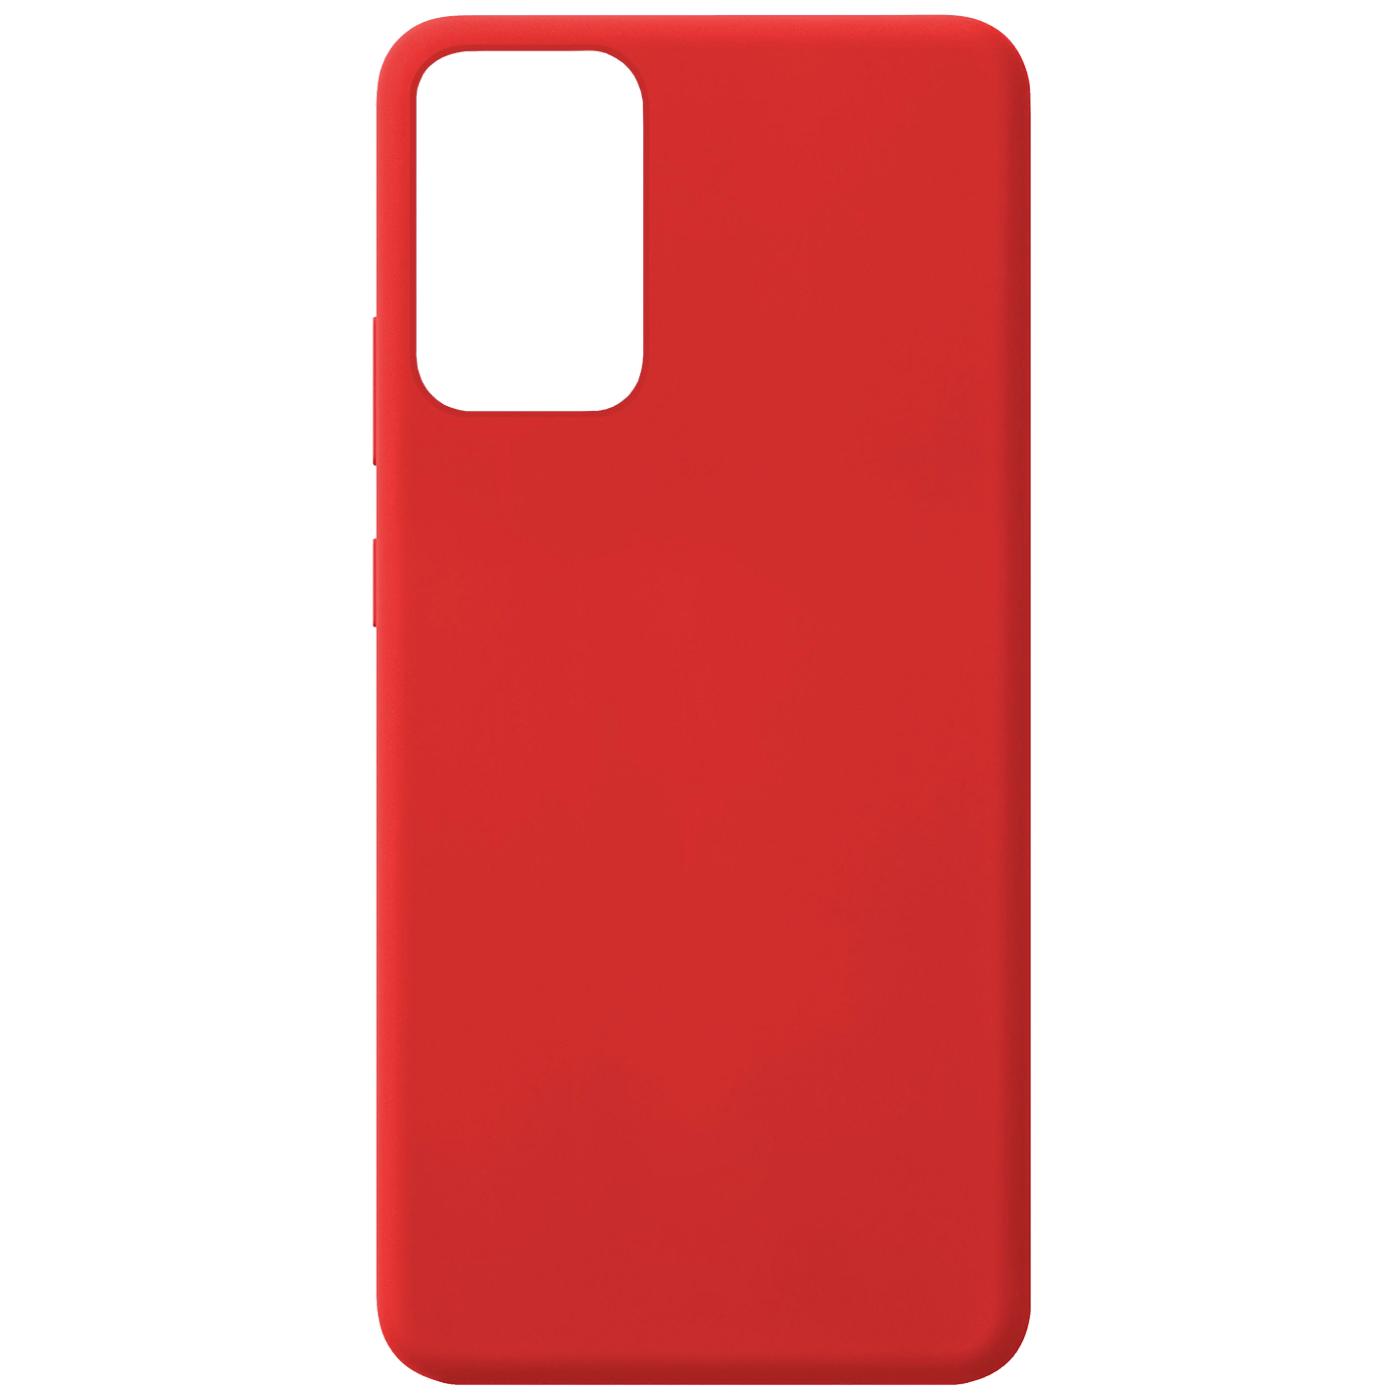 Futrola za mobitel Samsung A52, crvena